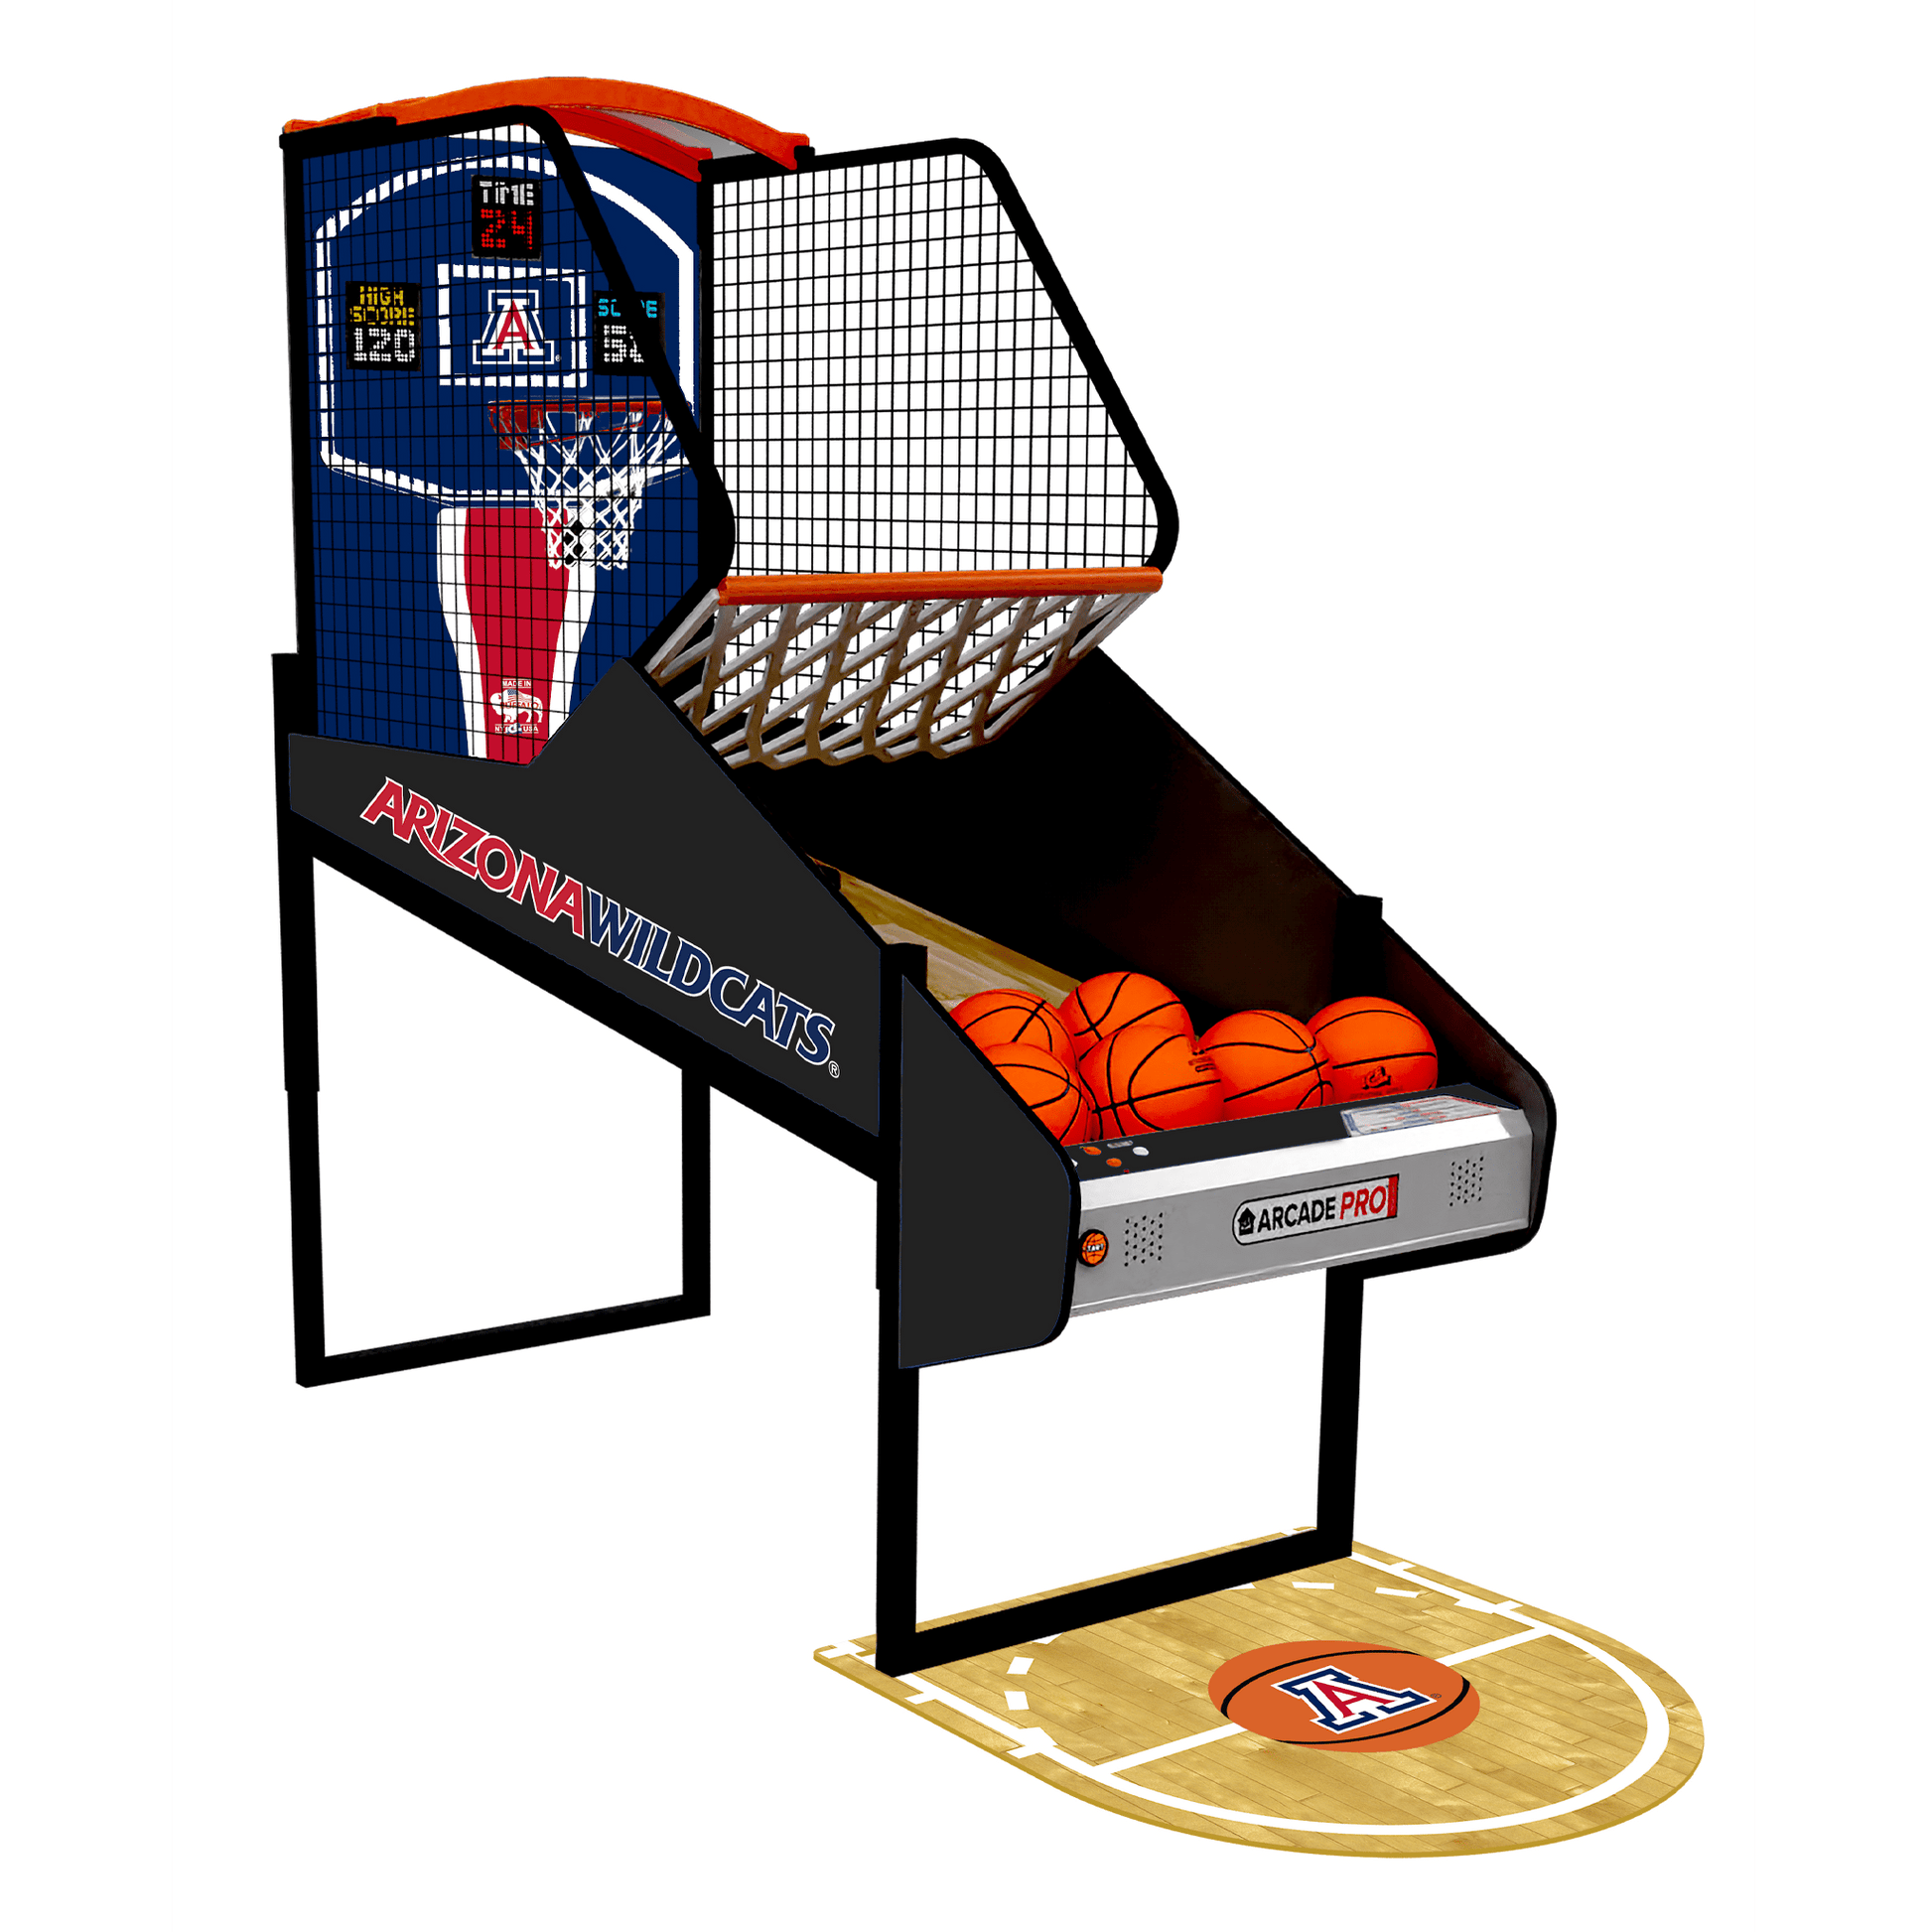 University of Arizona Wildcats College Hoops Arcade Innovative Concepts in Entertainment   